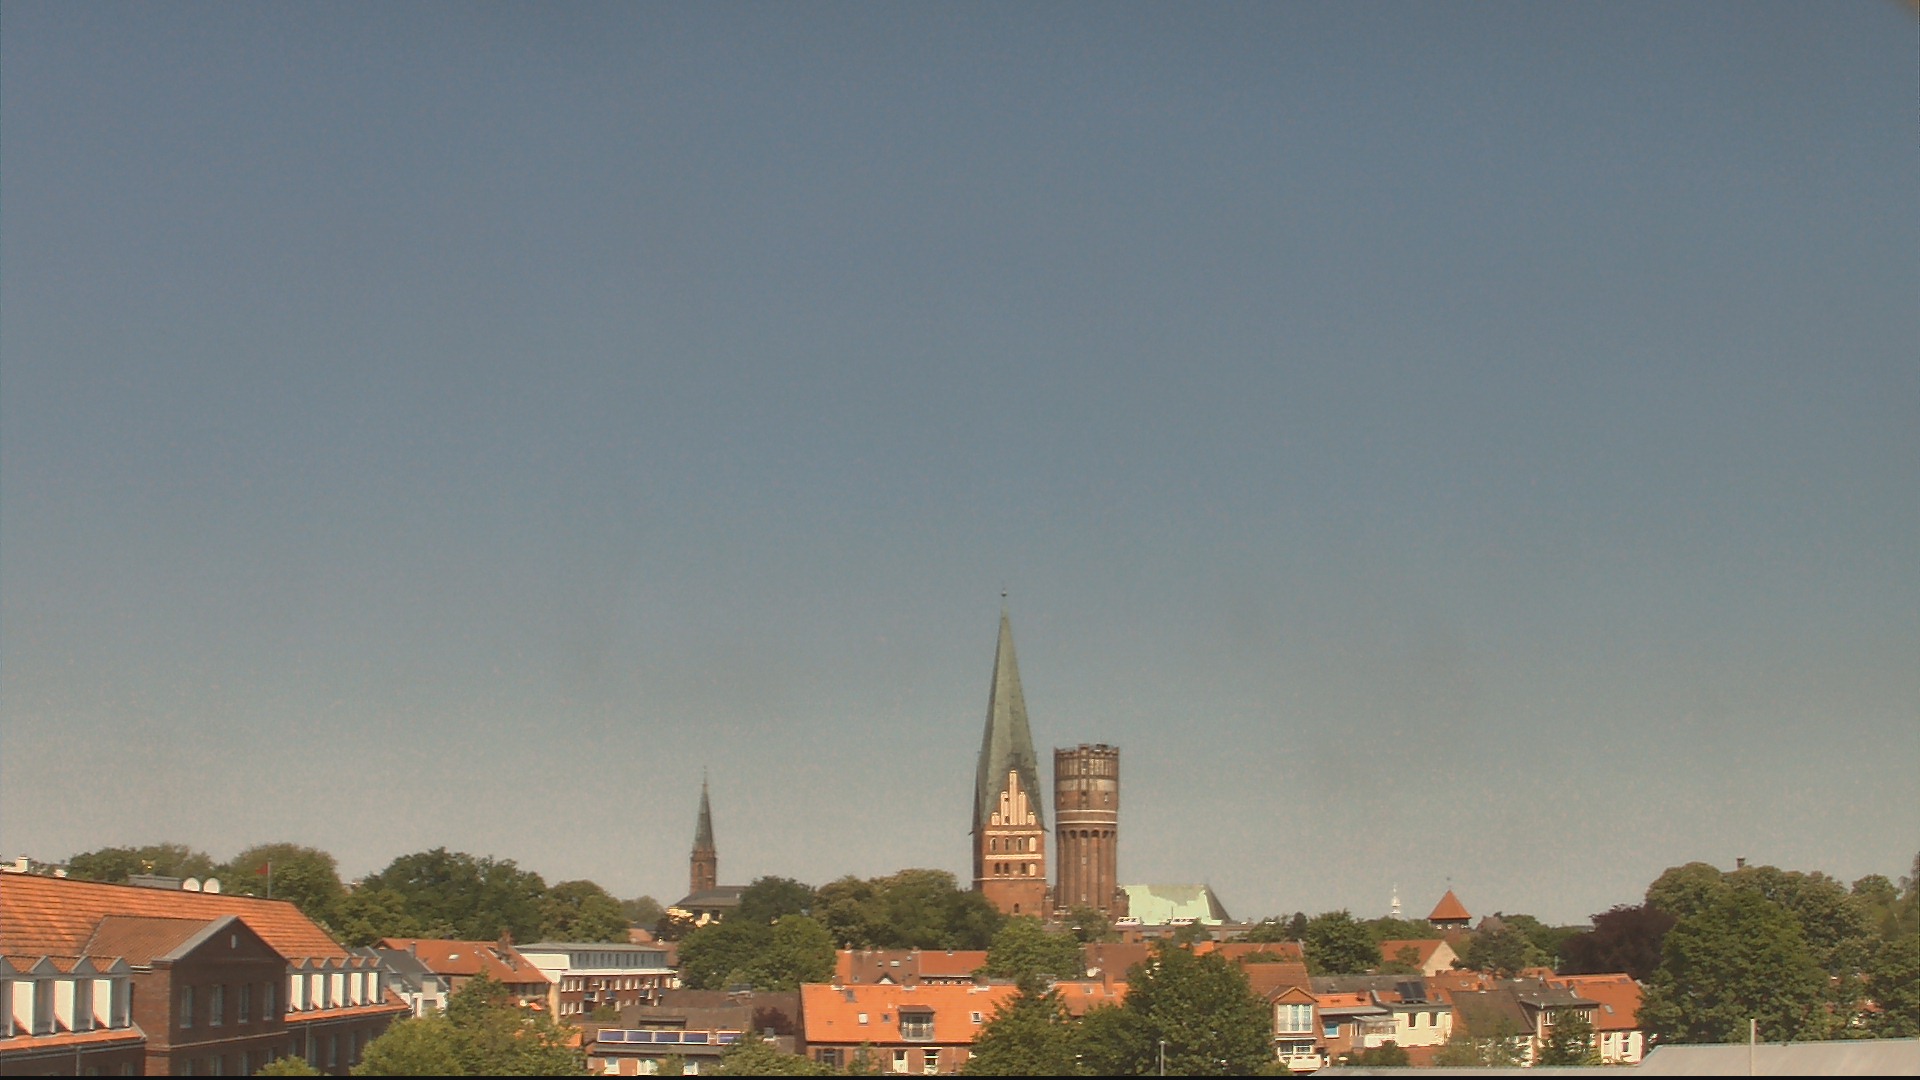 Lüneburg Tor. 12:47